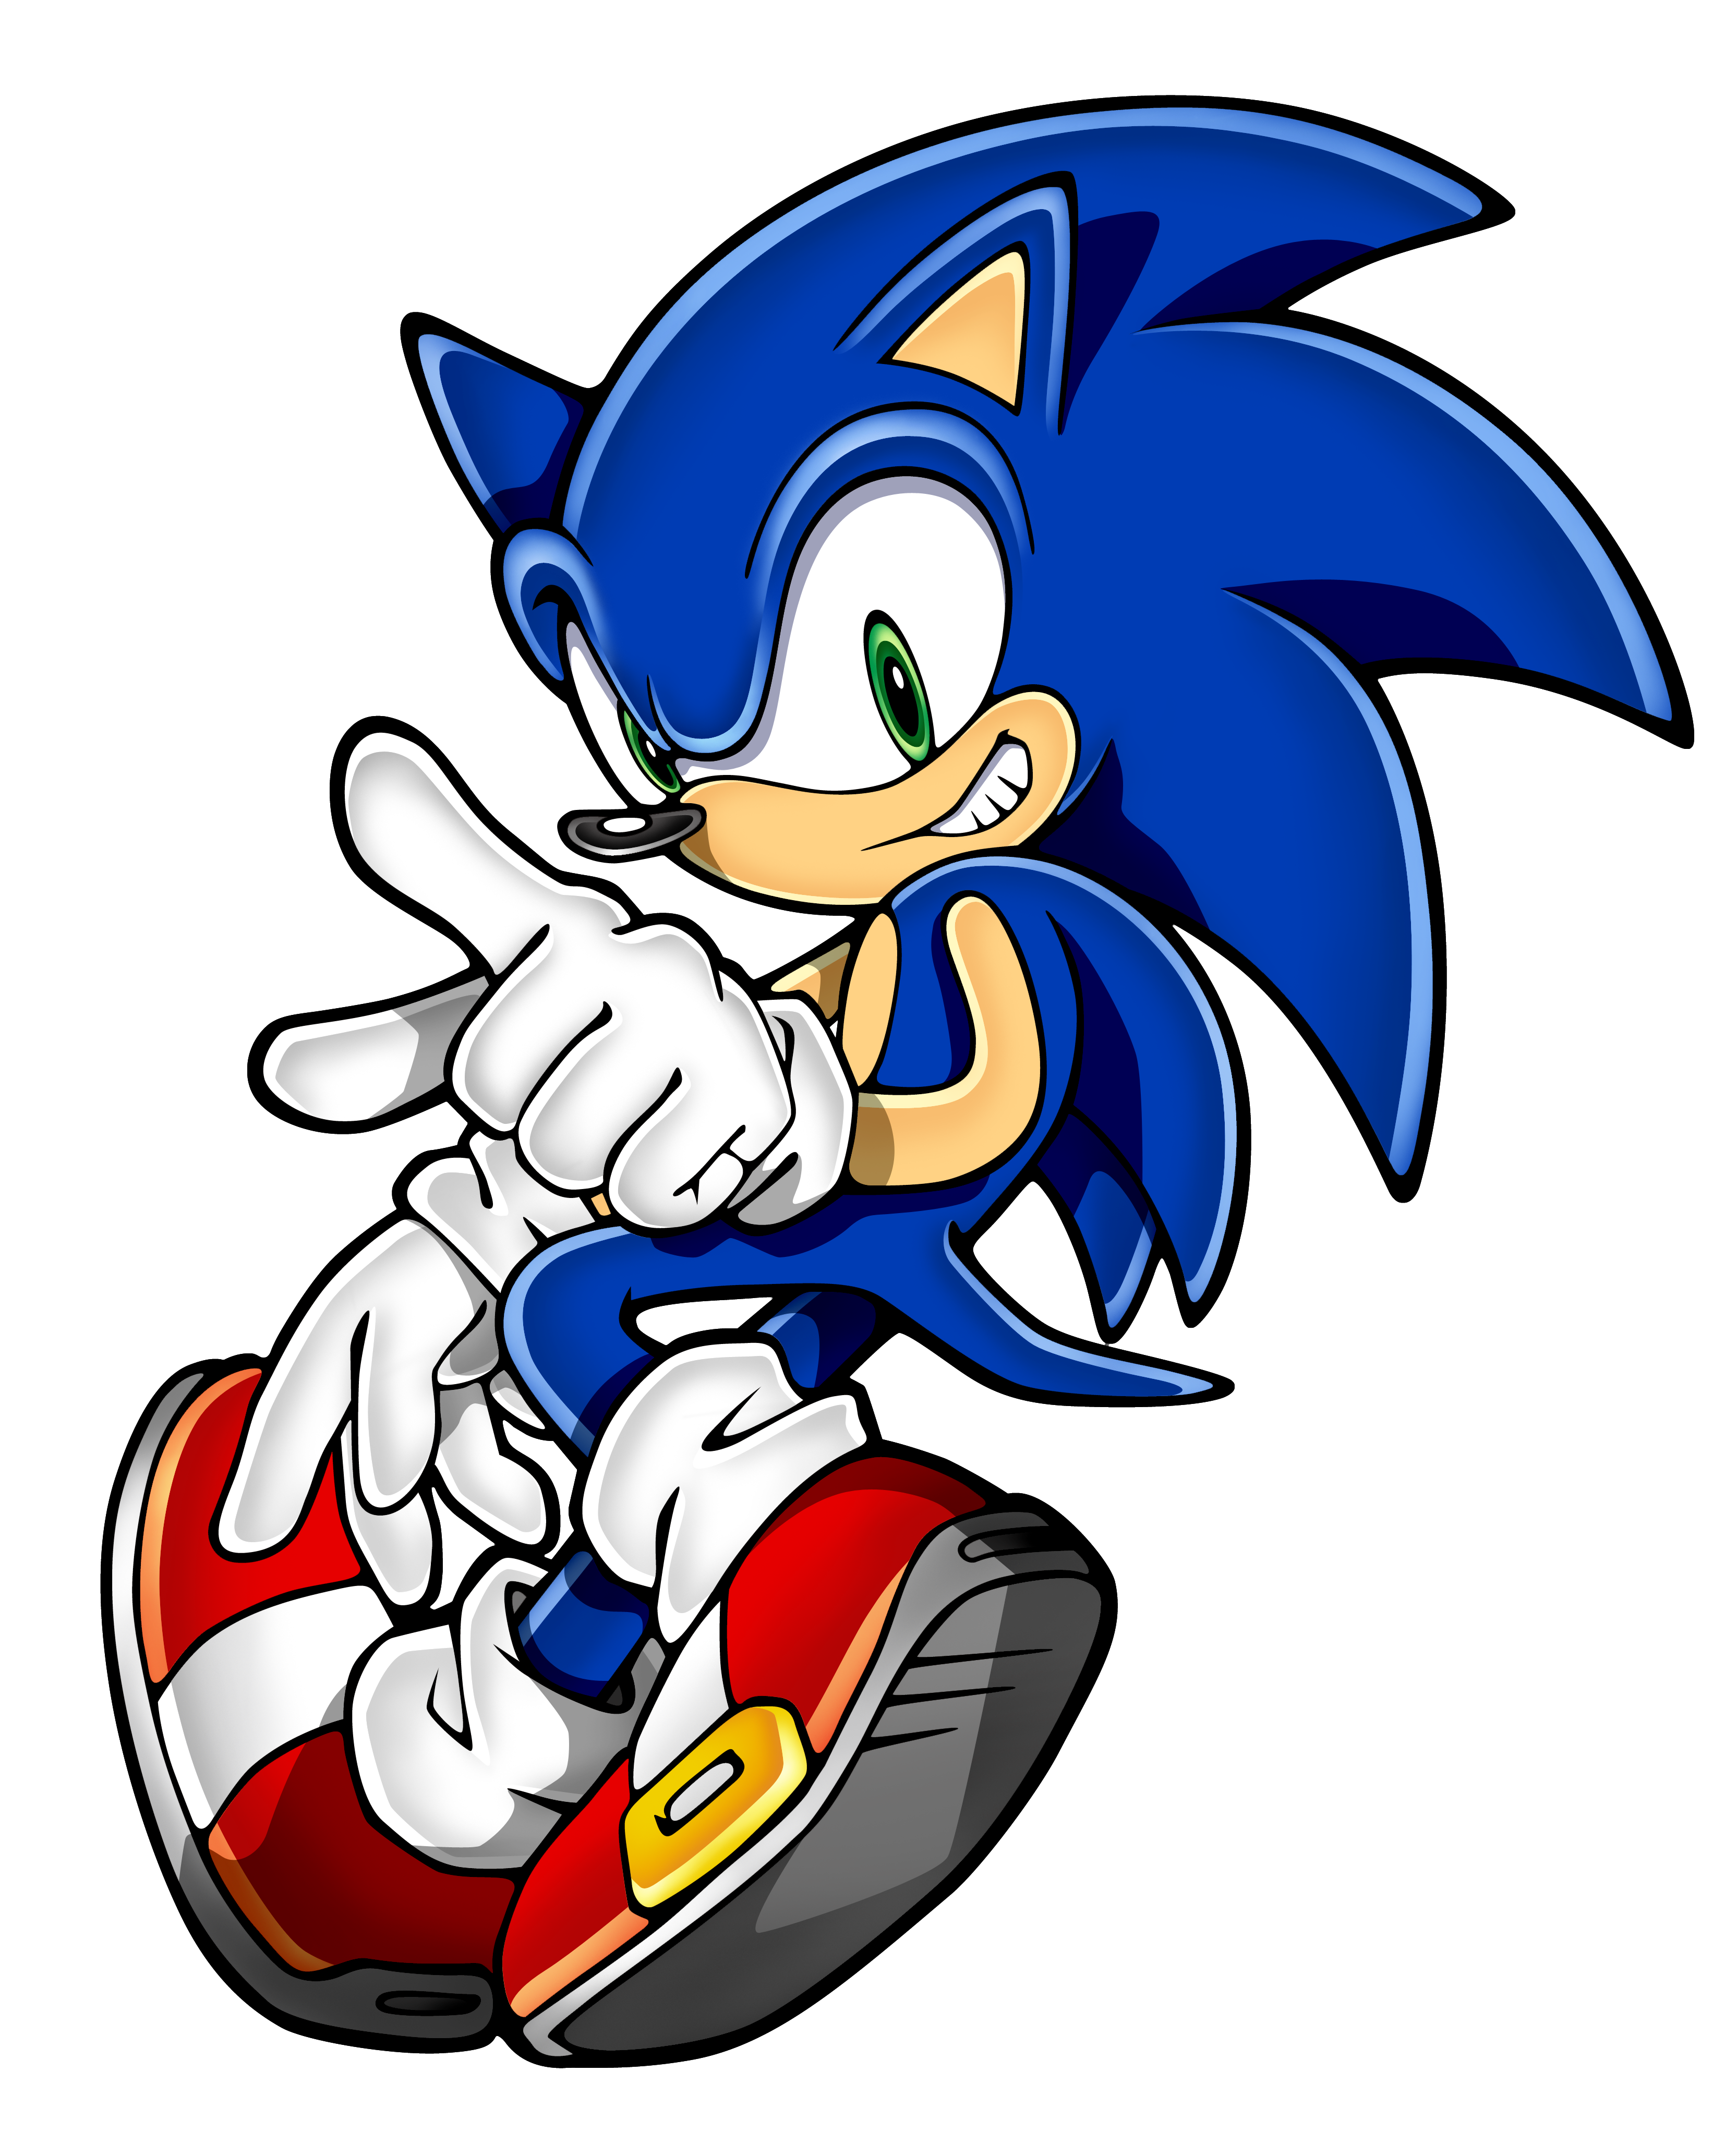 Sonic-Spiele